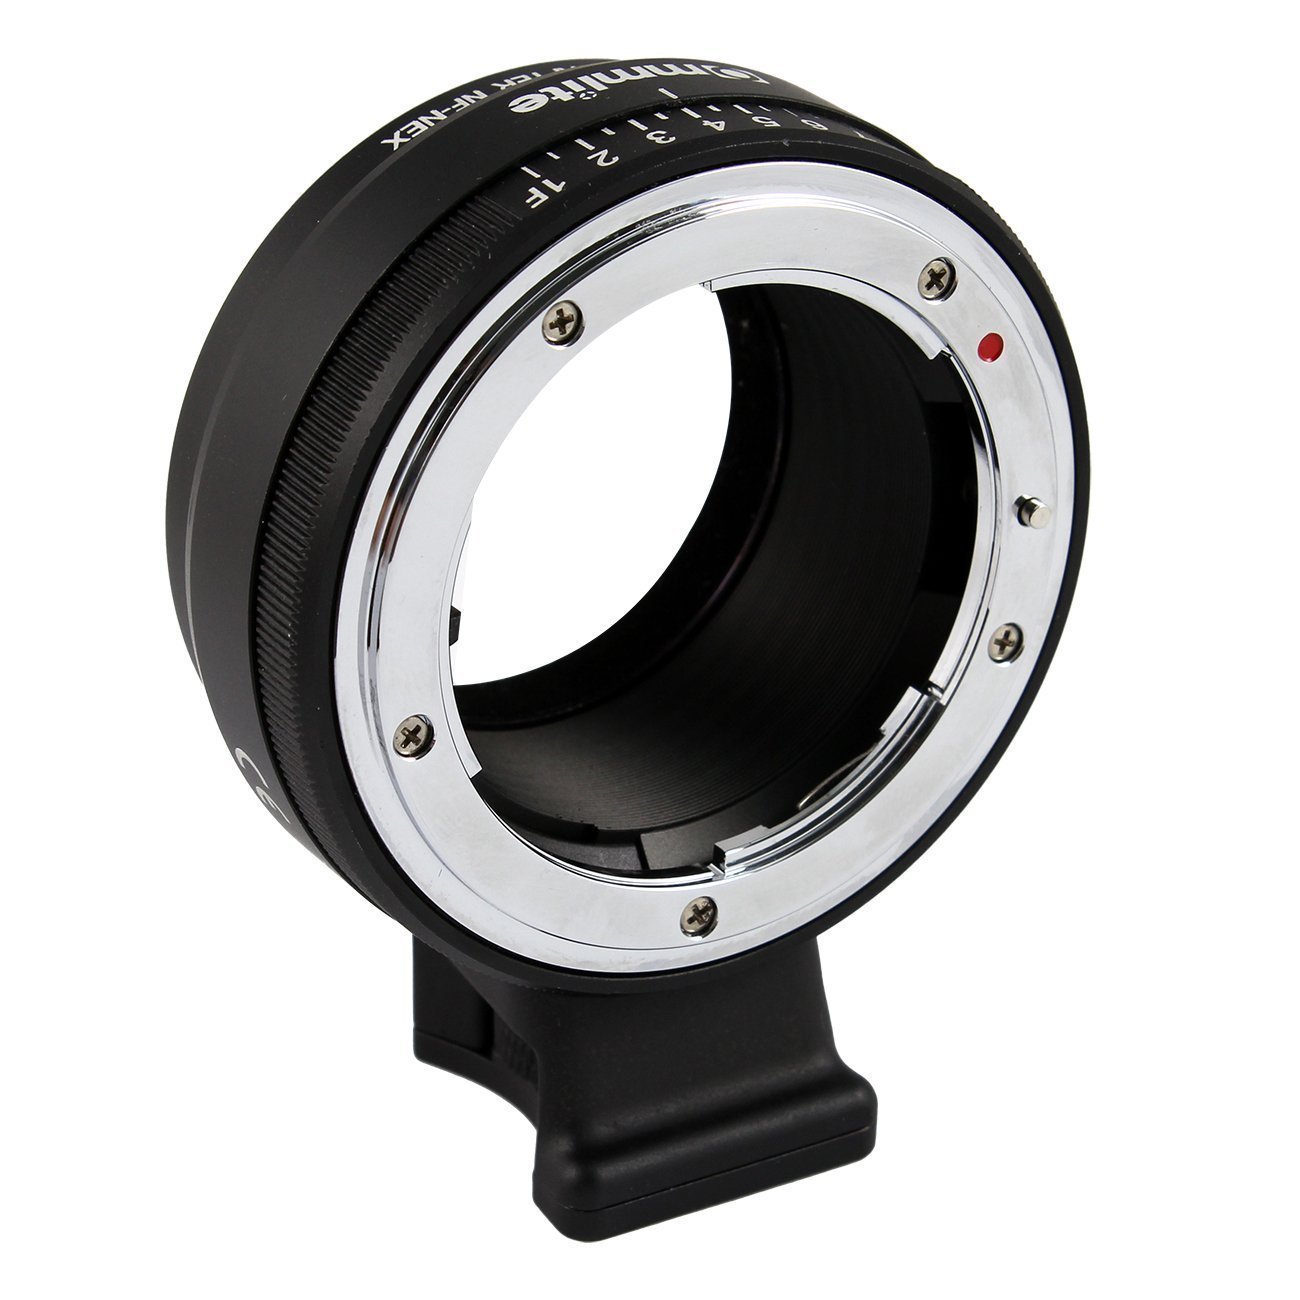 Mount AiG-E-mount/ Nikon-Emount (Full-Frame) chỉnh khẩu cho lens Nikkor G (Đen)